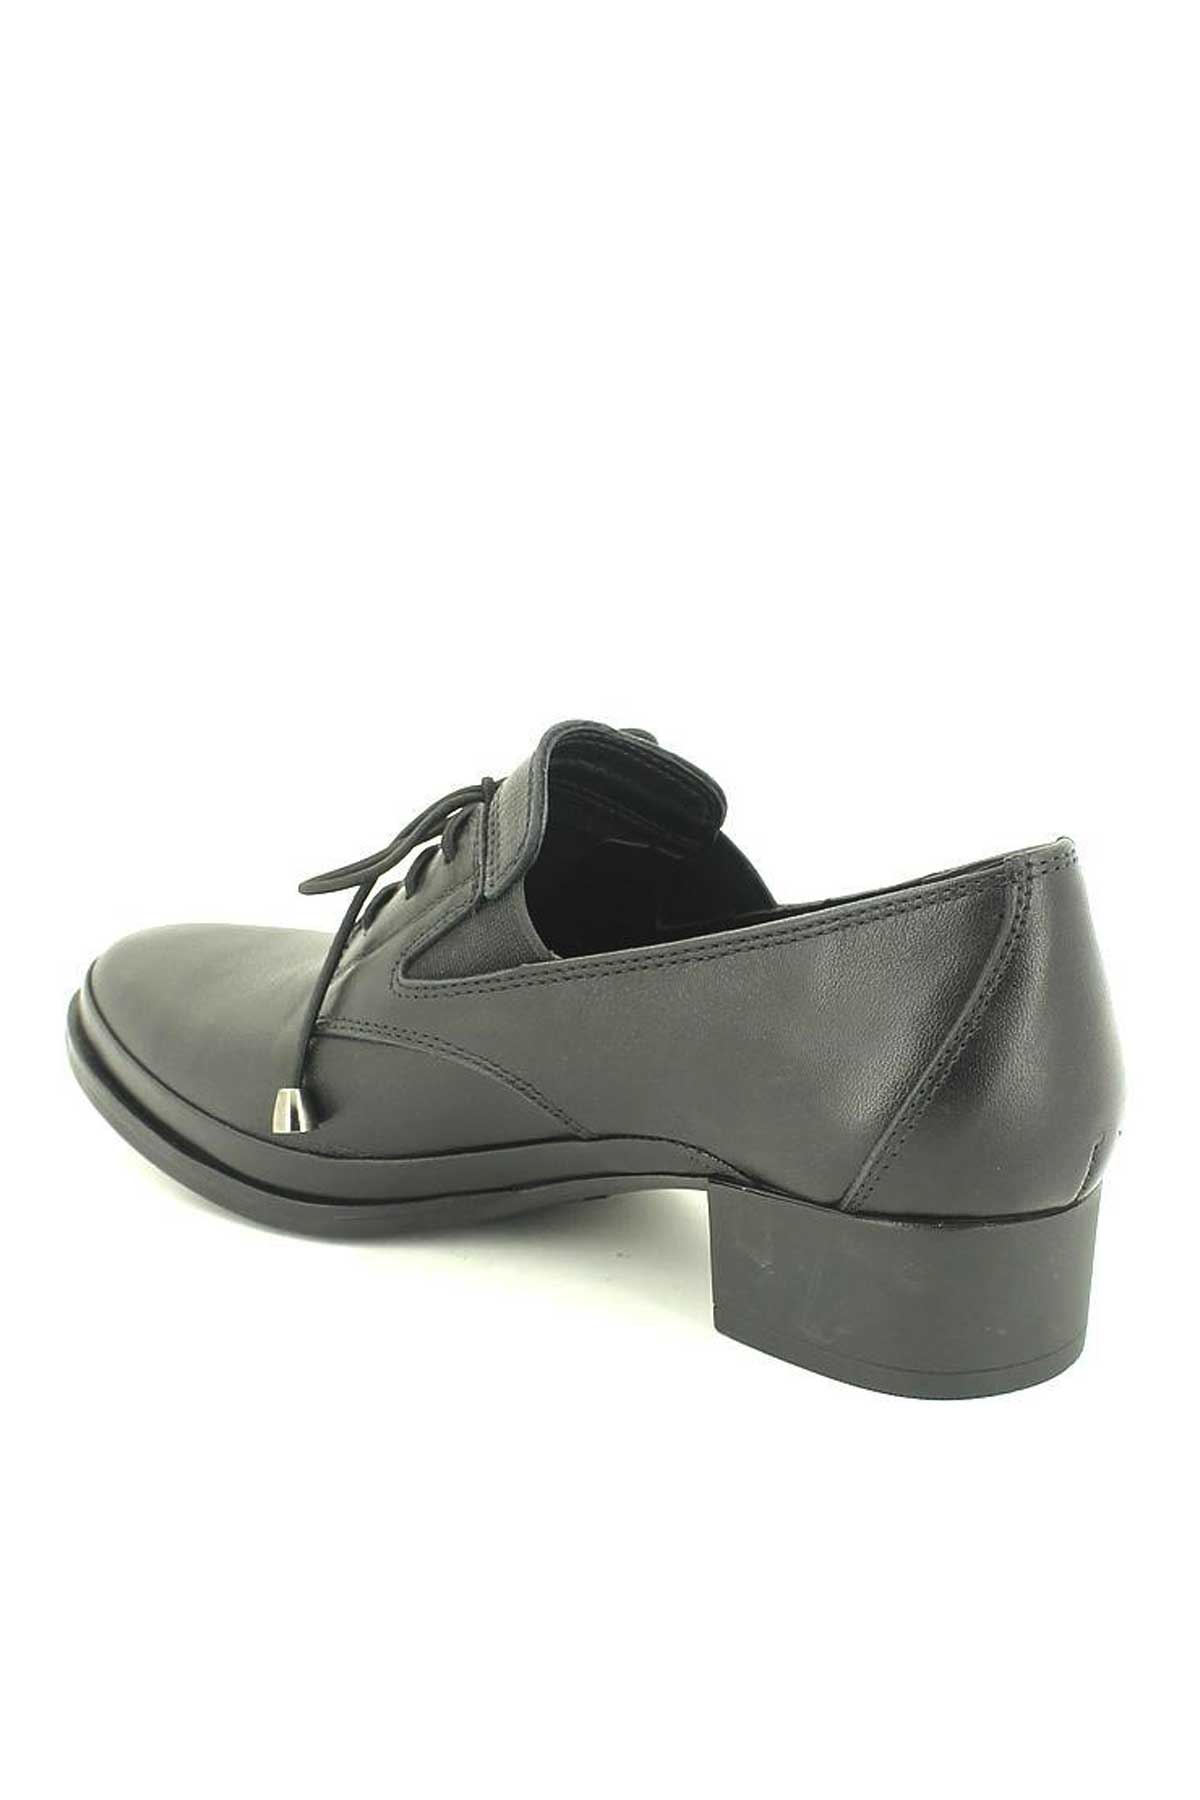 Kadın Topuklu Deri Ayakkabı Siyah 1709201K - Thumbnail